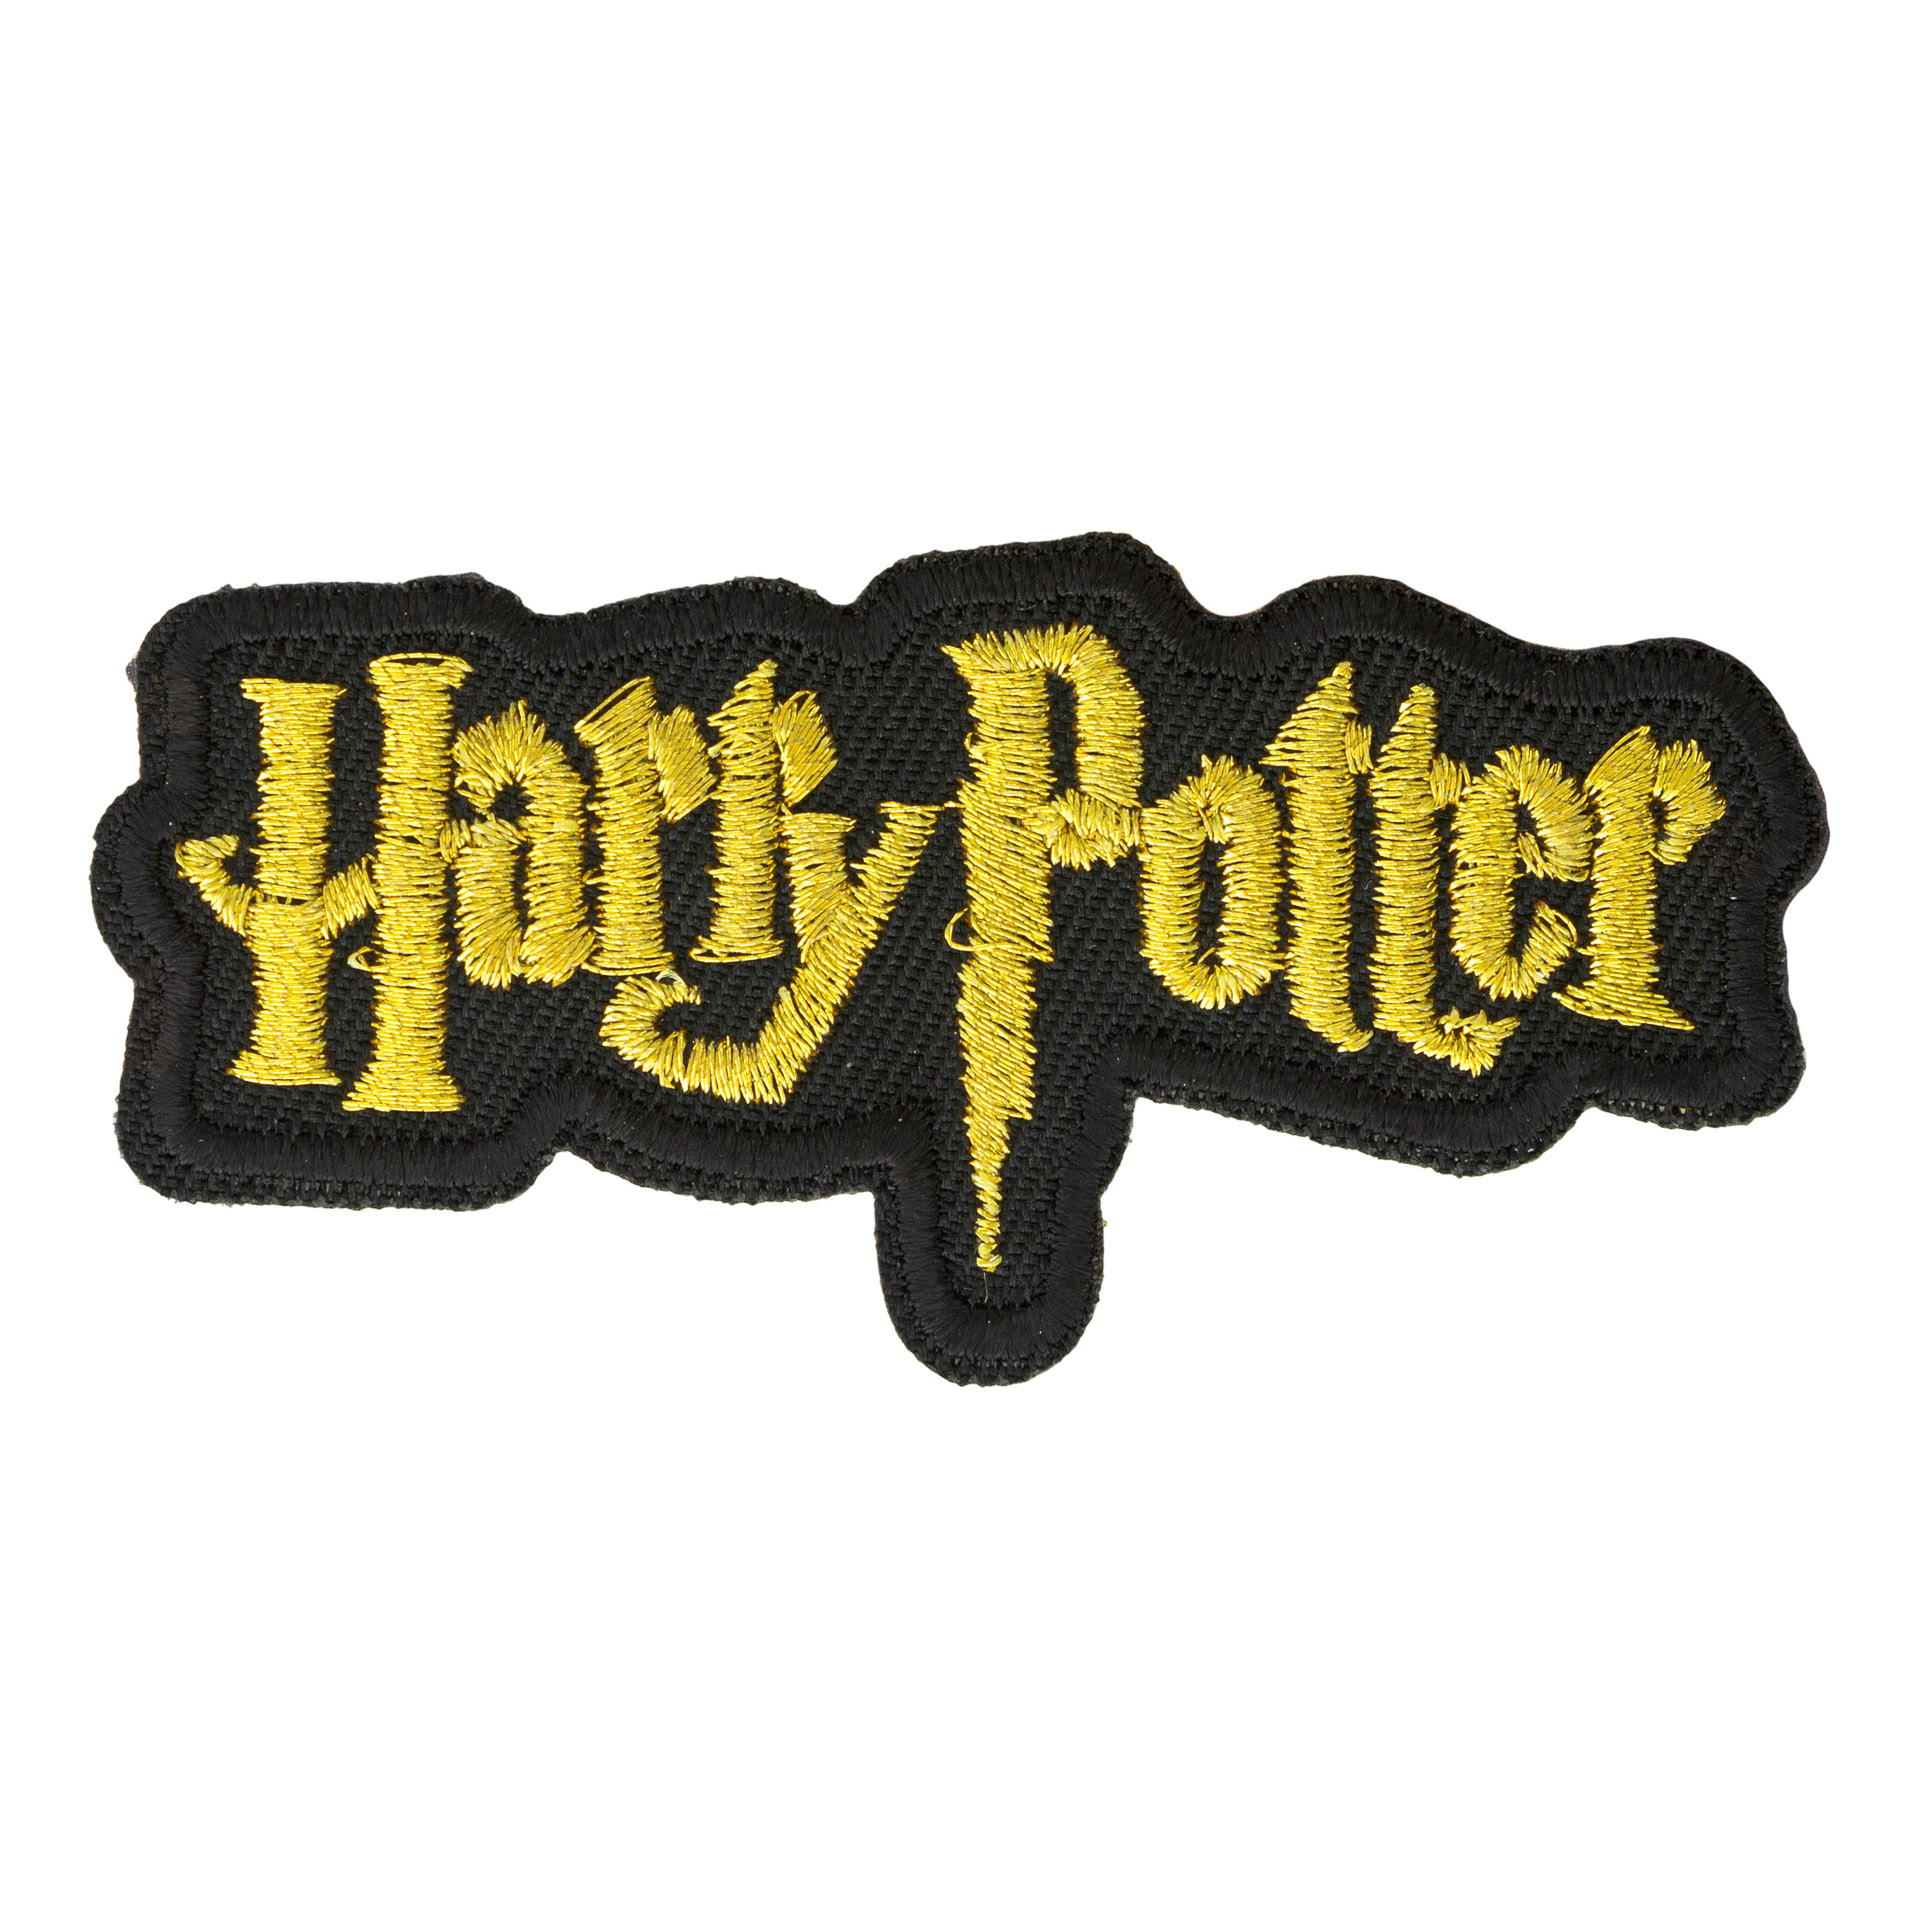 Patch thermocollant Harry Potter – Harry Potter logo – L'Atelier d'Archibald